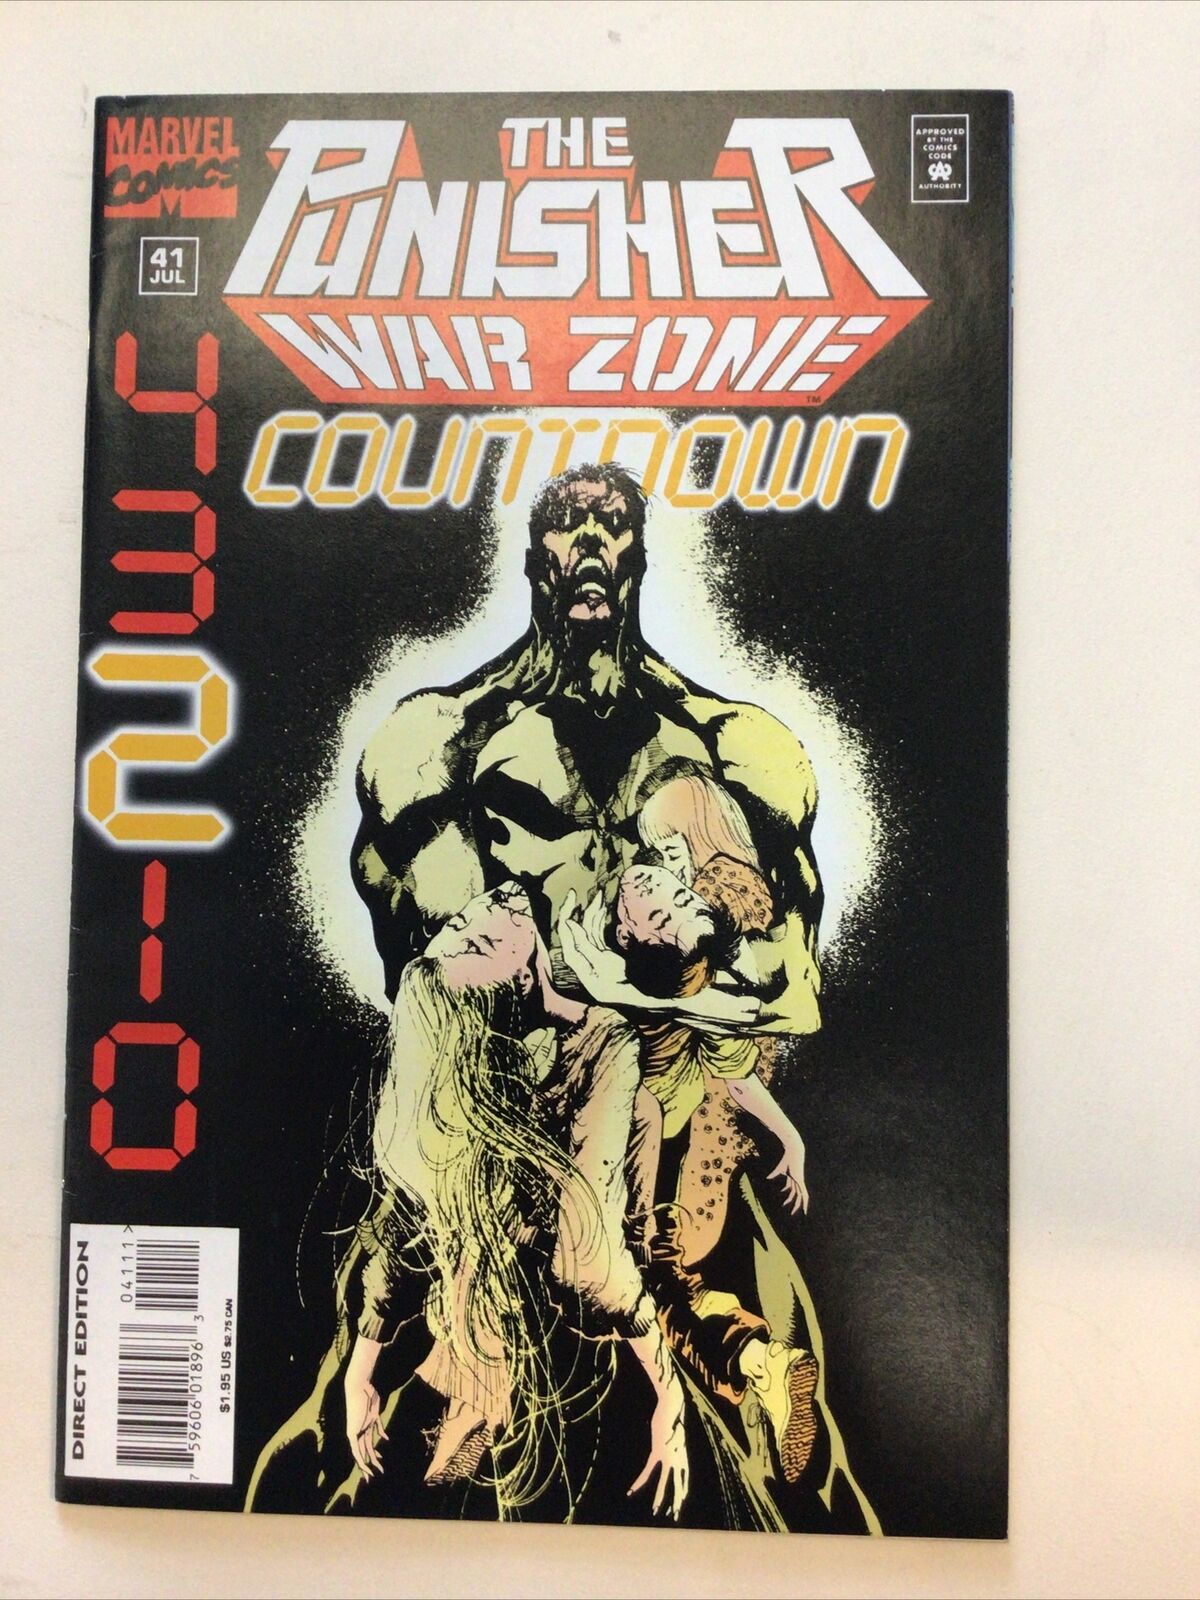 Marvel Comics The Punisher War Zone #41 1995